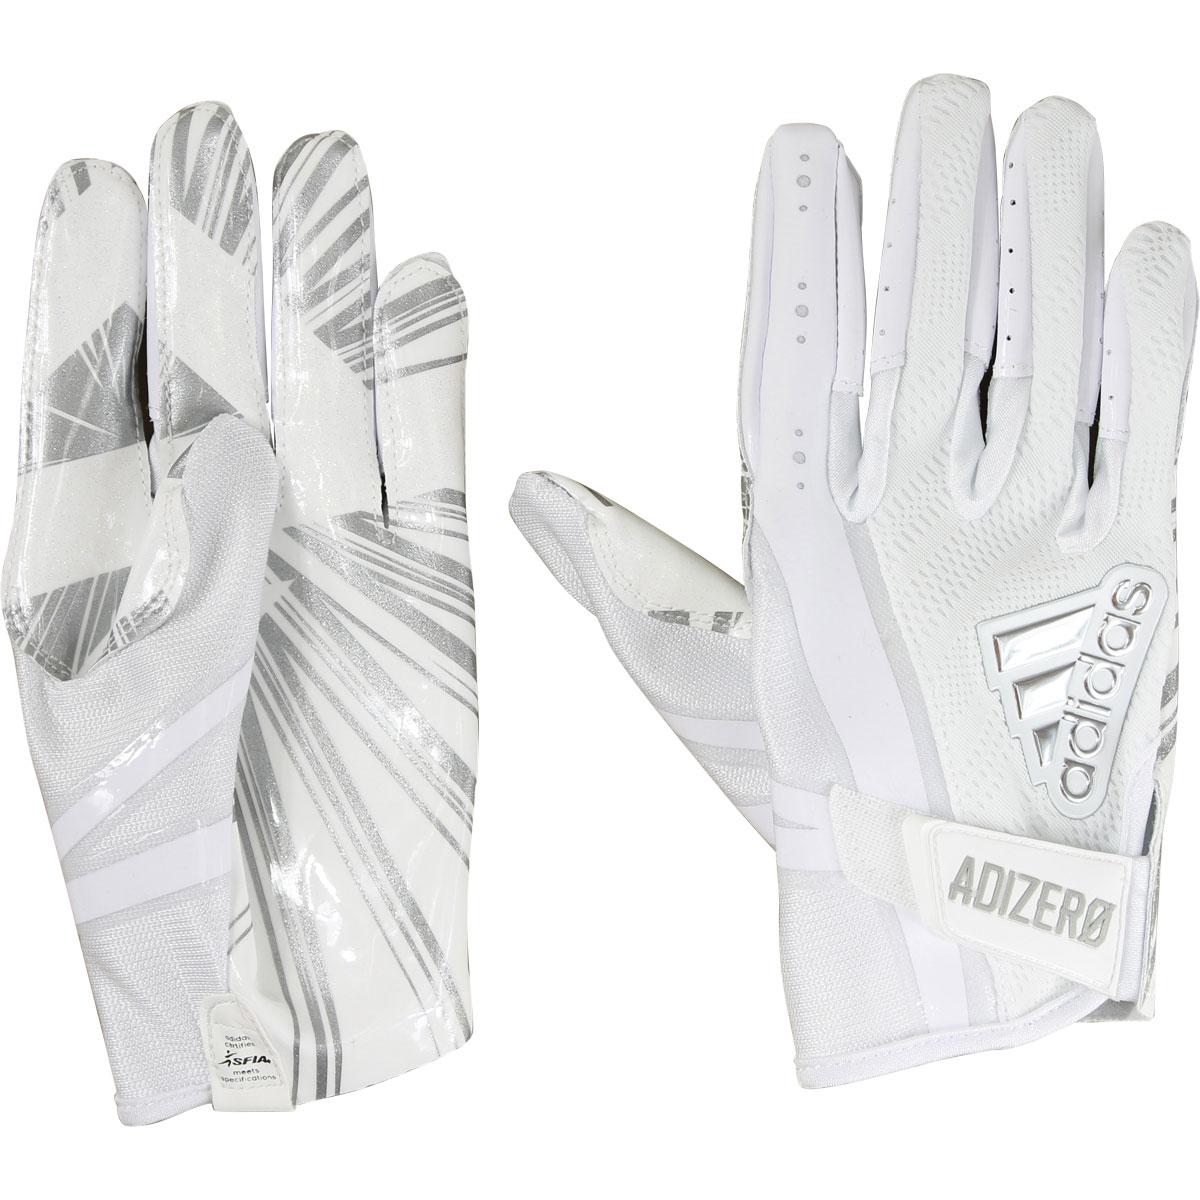 adizero 5 star 6.0 gloves